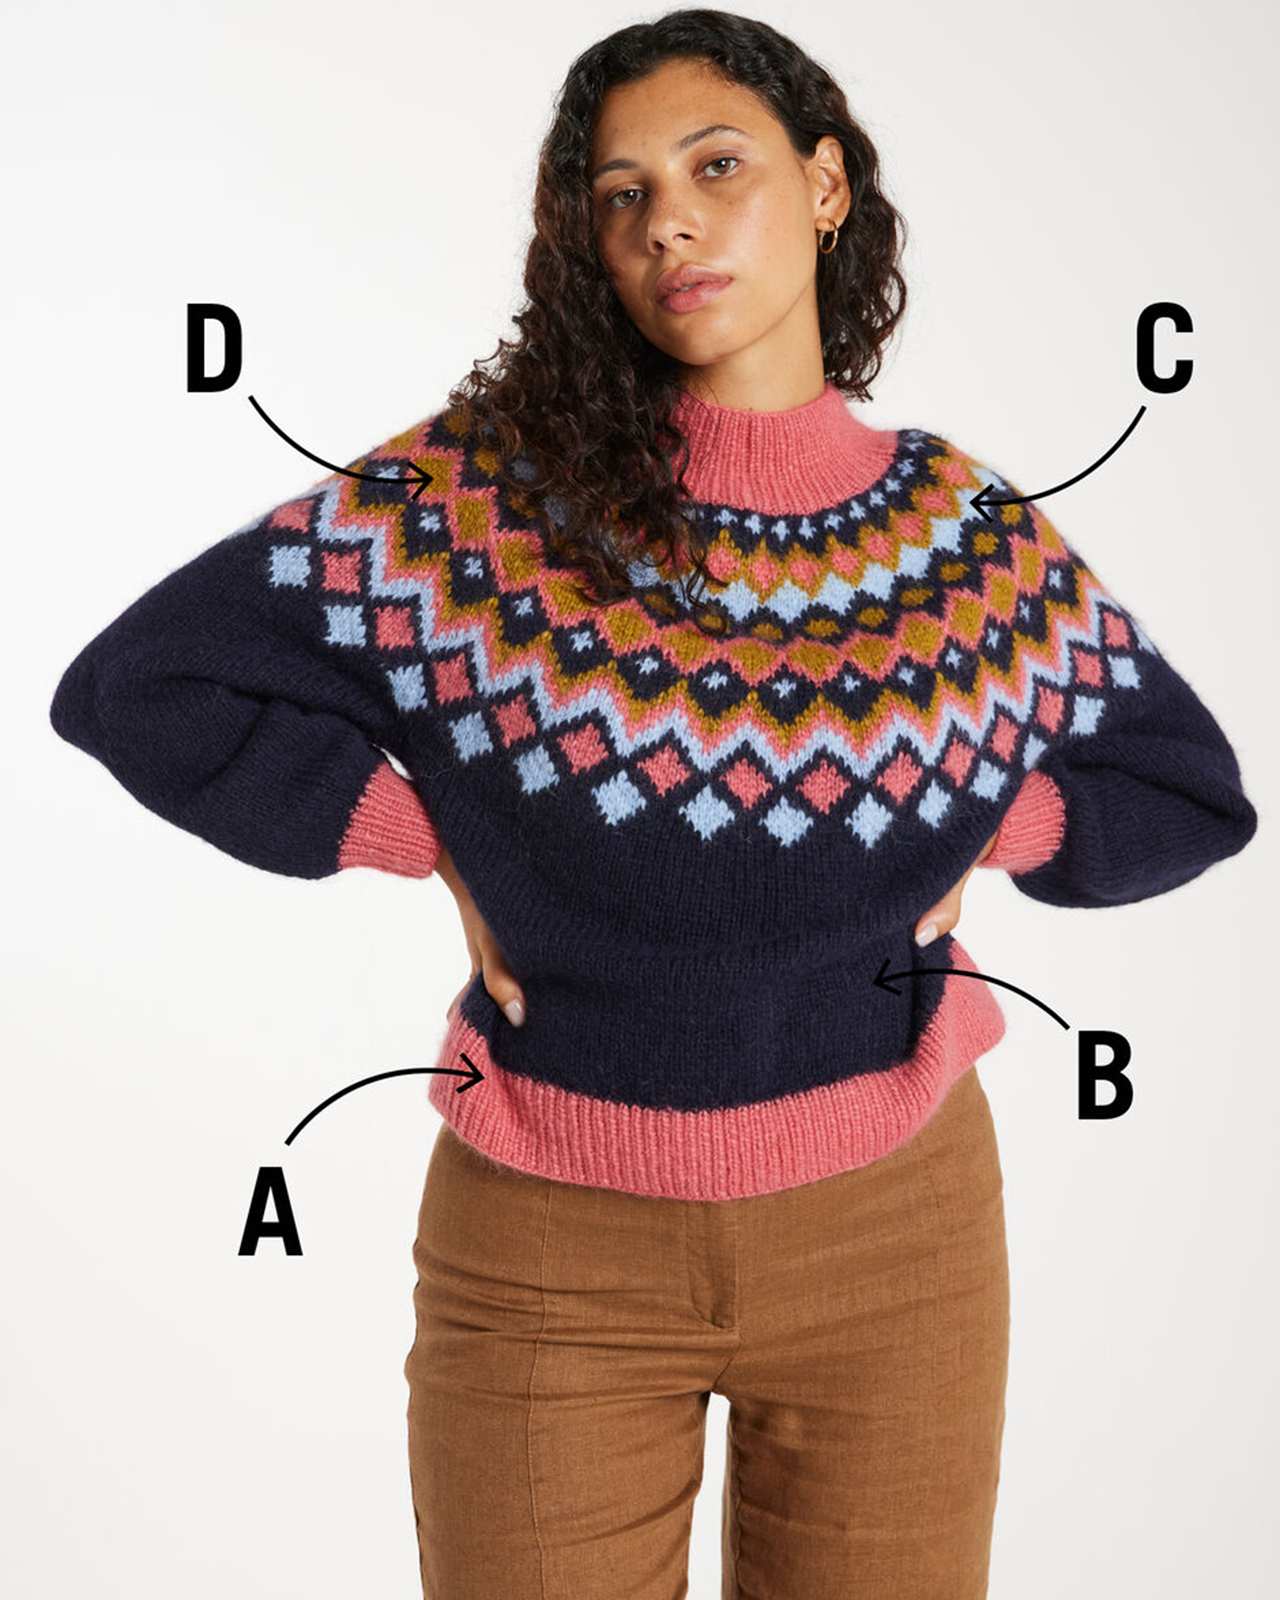 【JESPER SWEATER / PATTERN SET】フェアアイル柄のセーターの編み物パターン